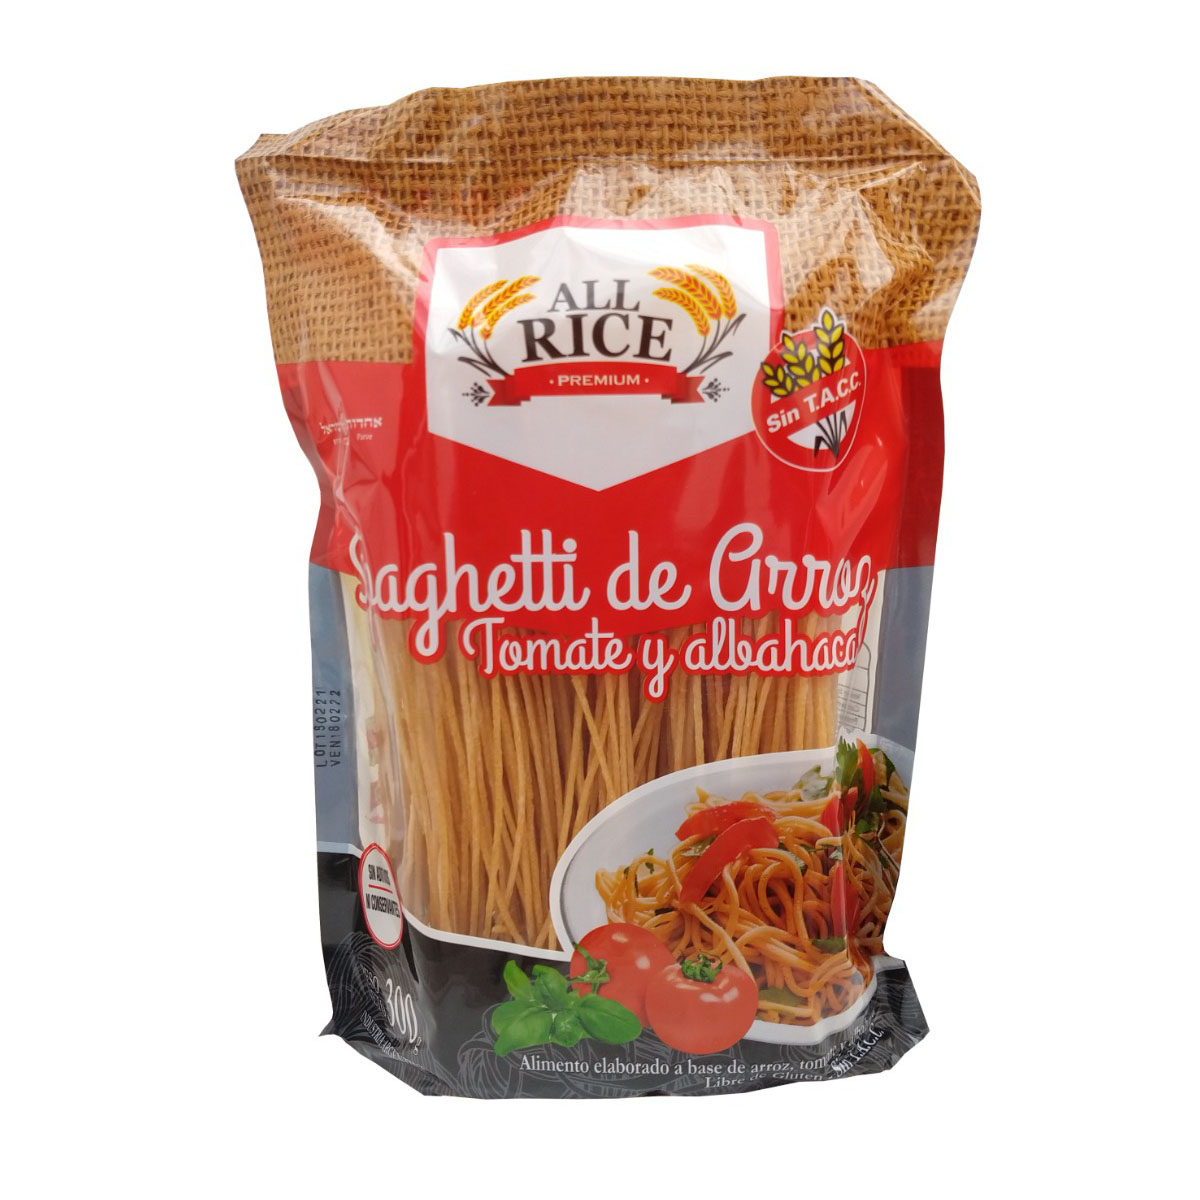 Spaghettis de Arroz All Rice Premium  Fideos All Rice de Arroz spaghettis